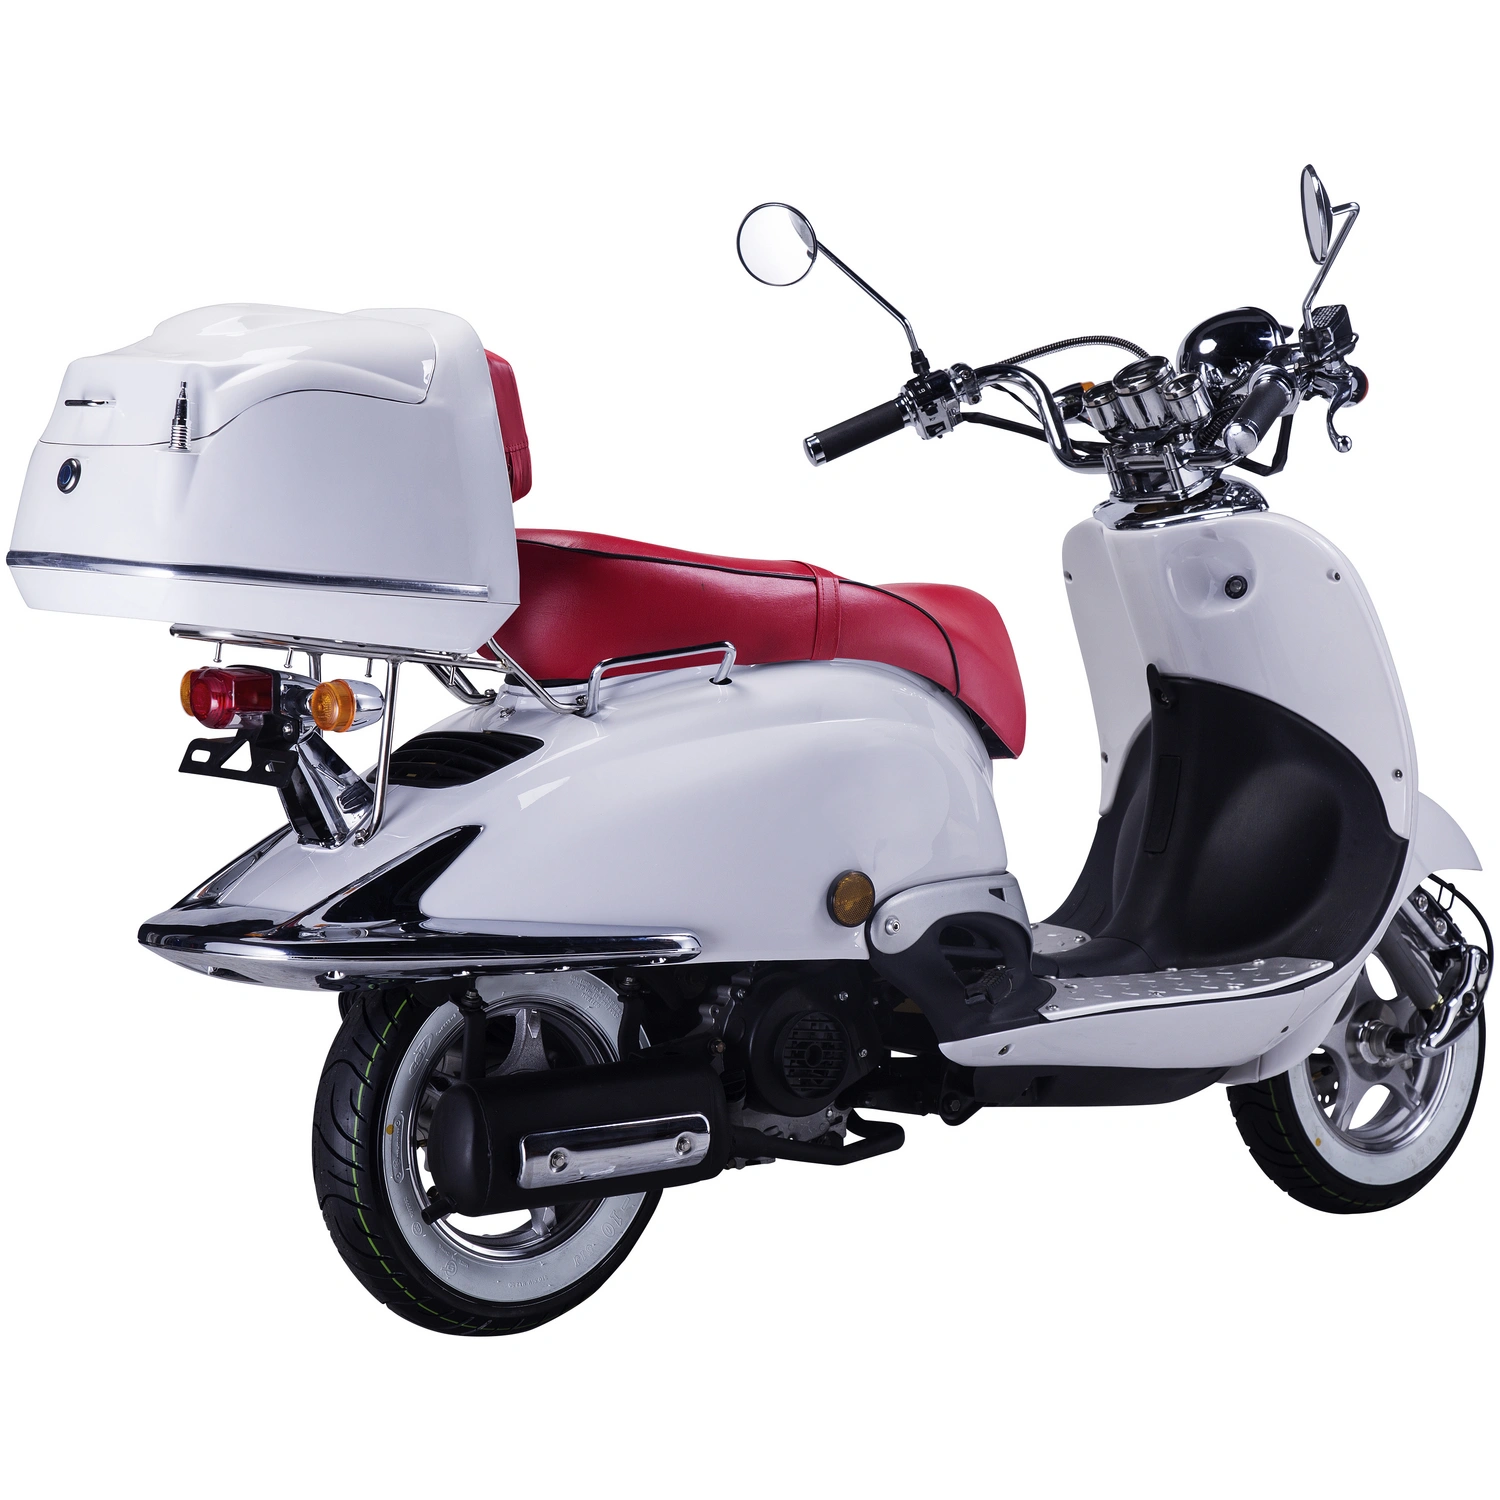 GT UNION Mofa »Strada«, 50 cm³, 25 km/h, Euro 5 | Motorroller